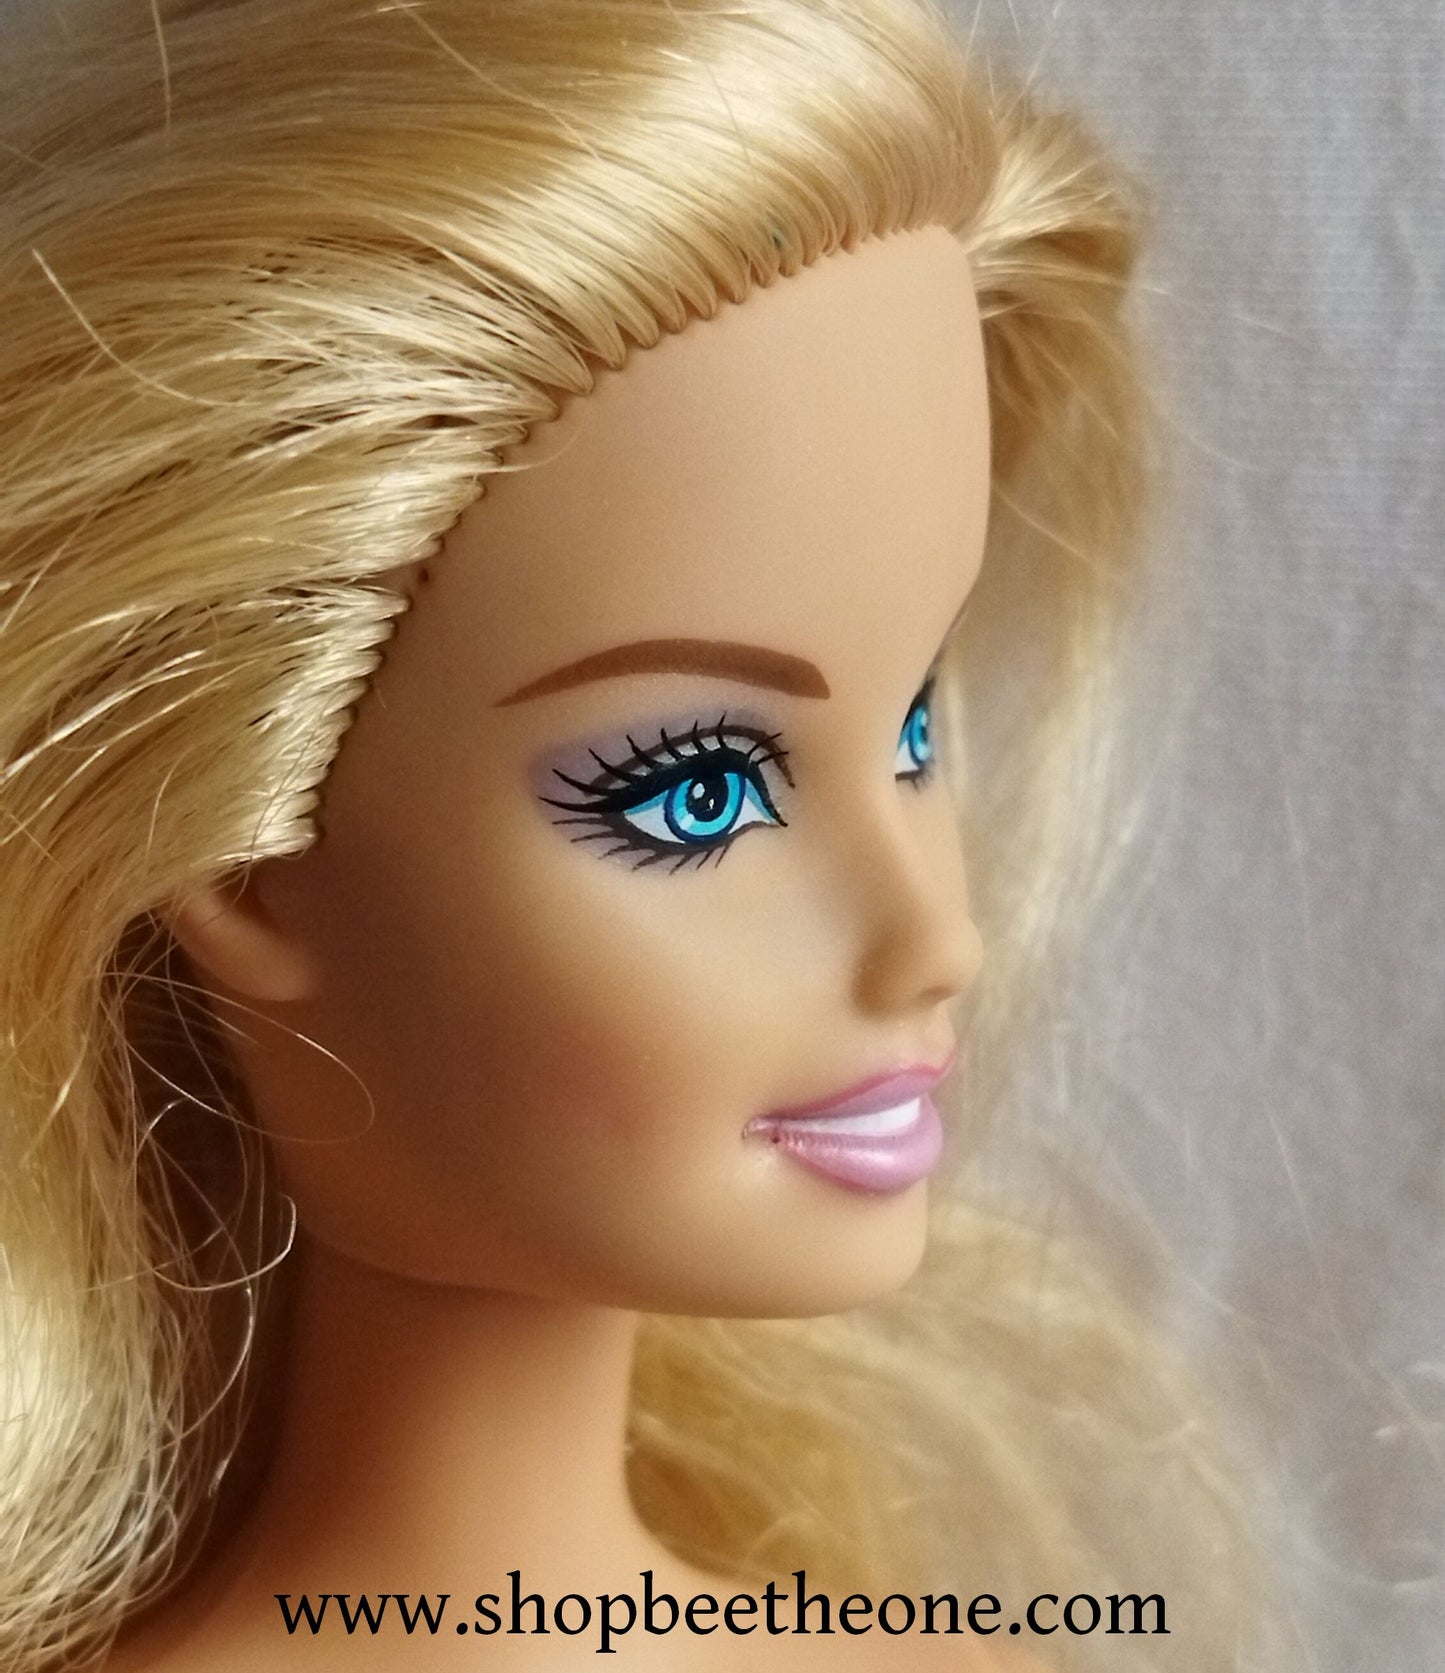 Barbie Fashionistas Girly 100 + Poses #R9880 - Mattel 2009 - Poupée nue